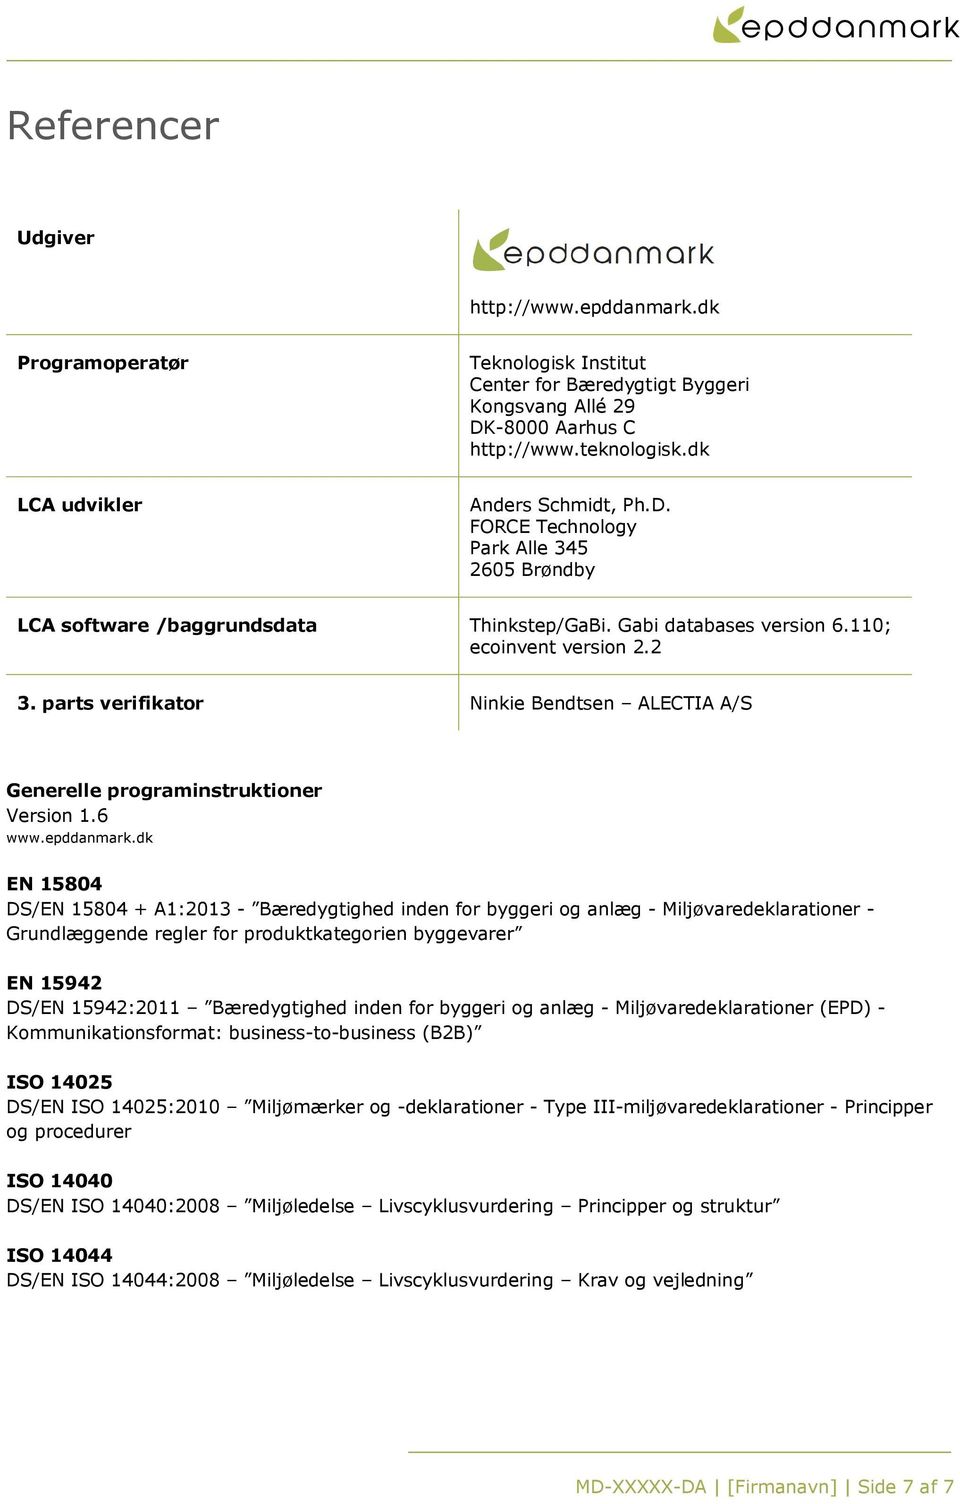 parts verifikator Ninkie Bendtsen ALECTIA A/S Generelle programinstruktioner Version 1.6 www.epddanmark.